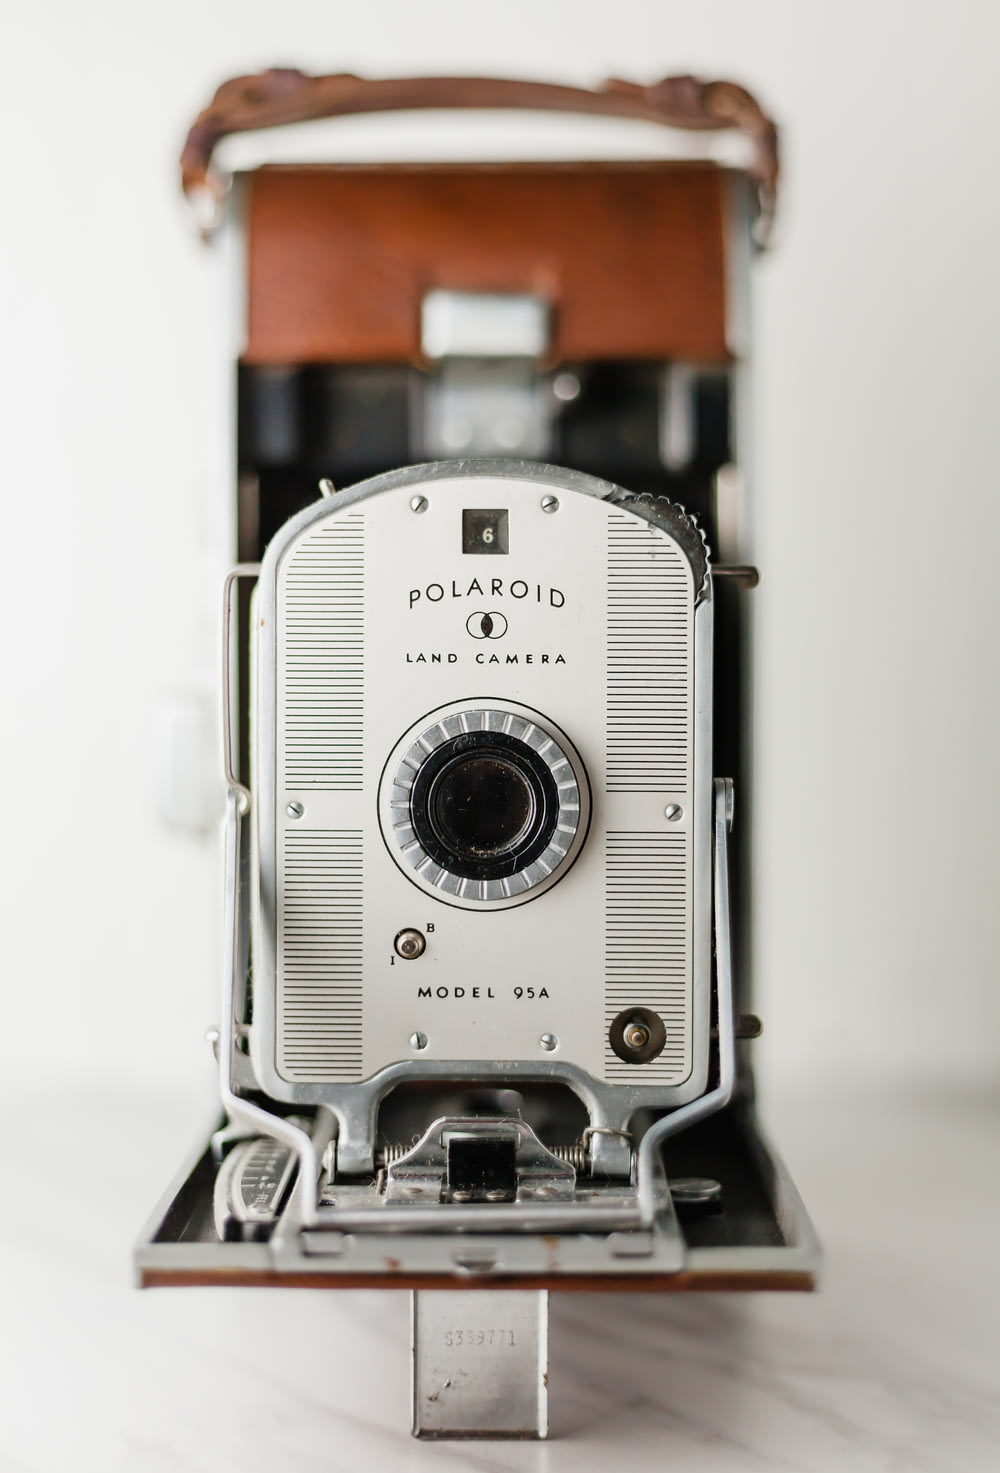 câmera terrestre Polaroid prateada e marrom